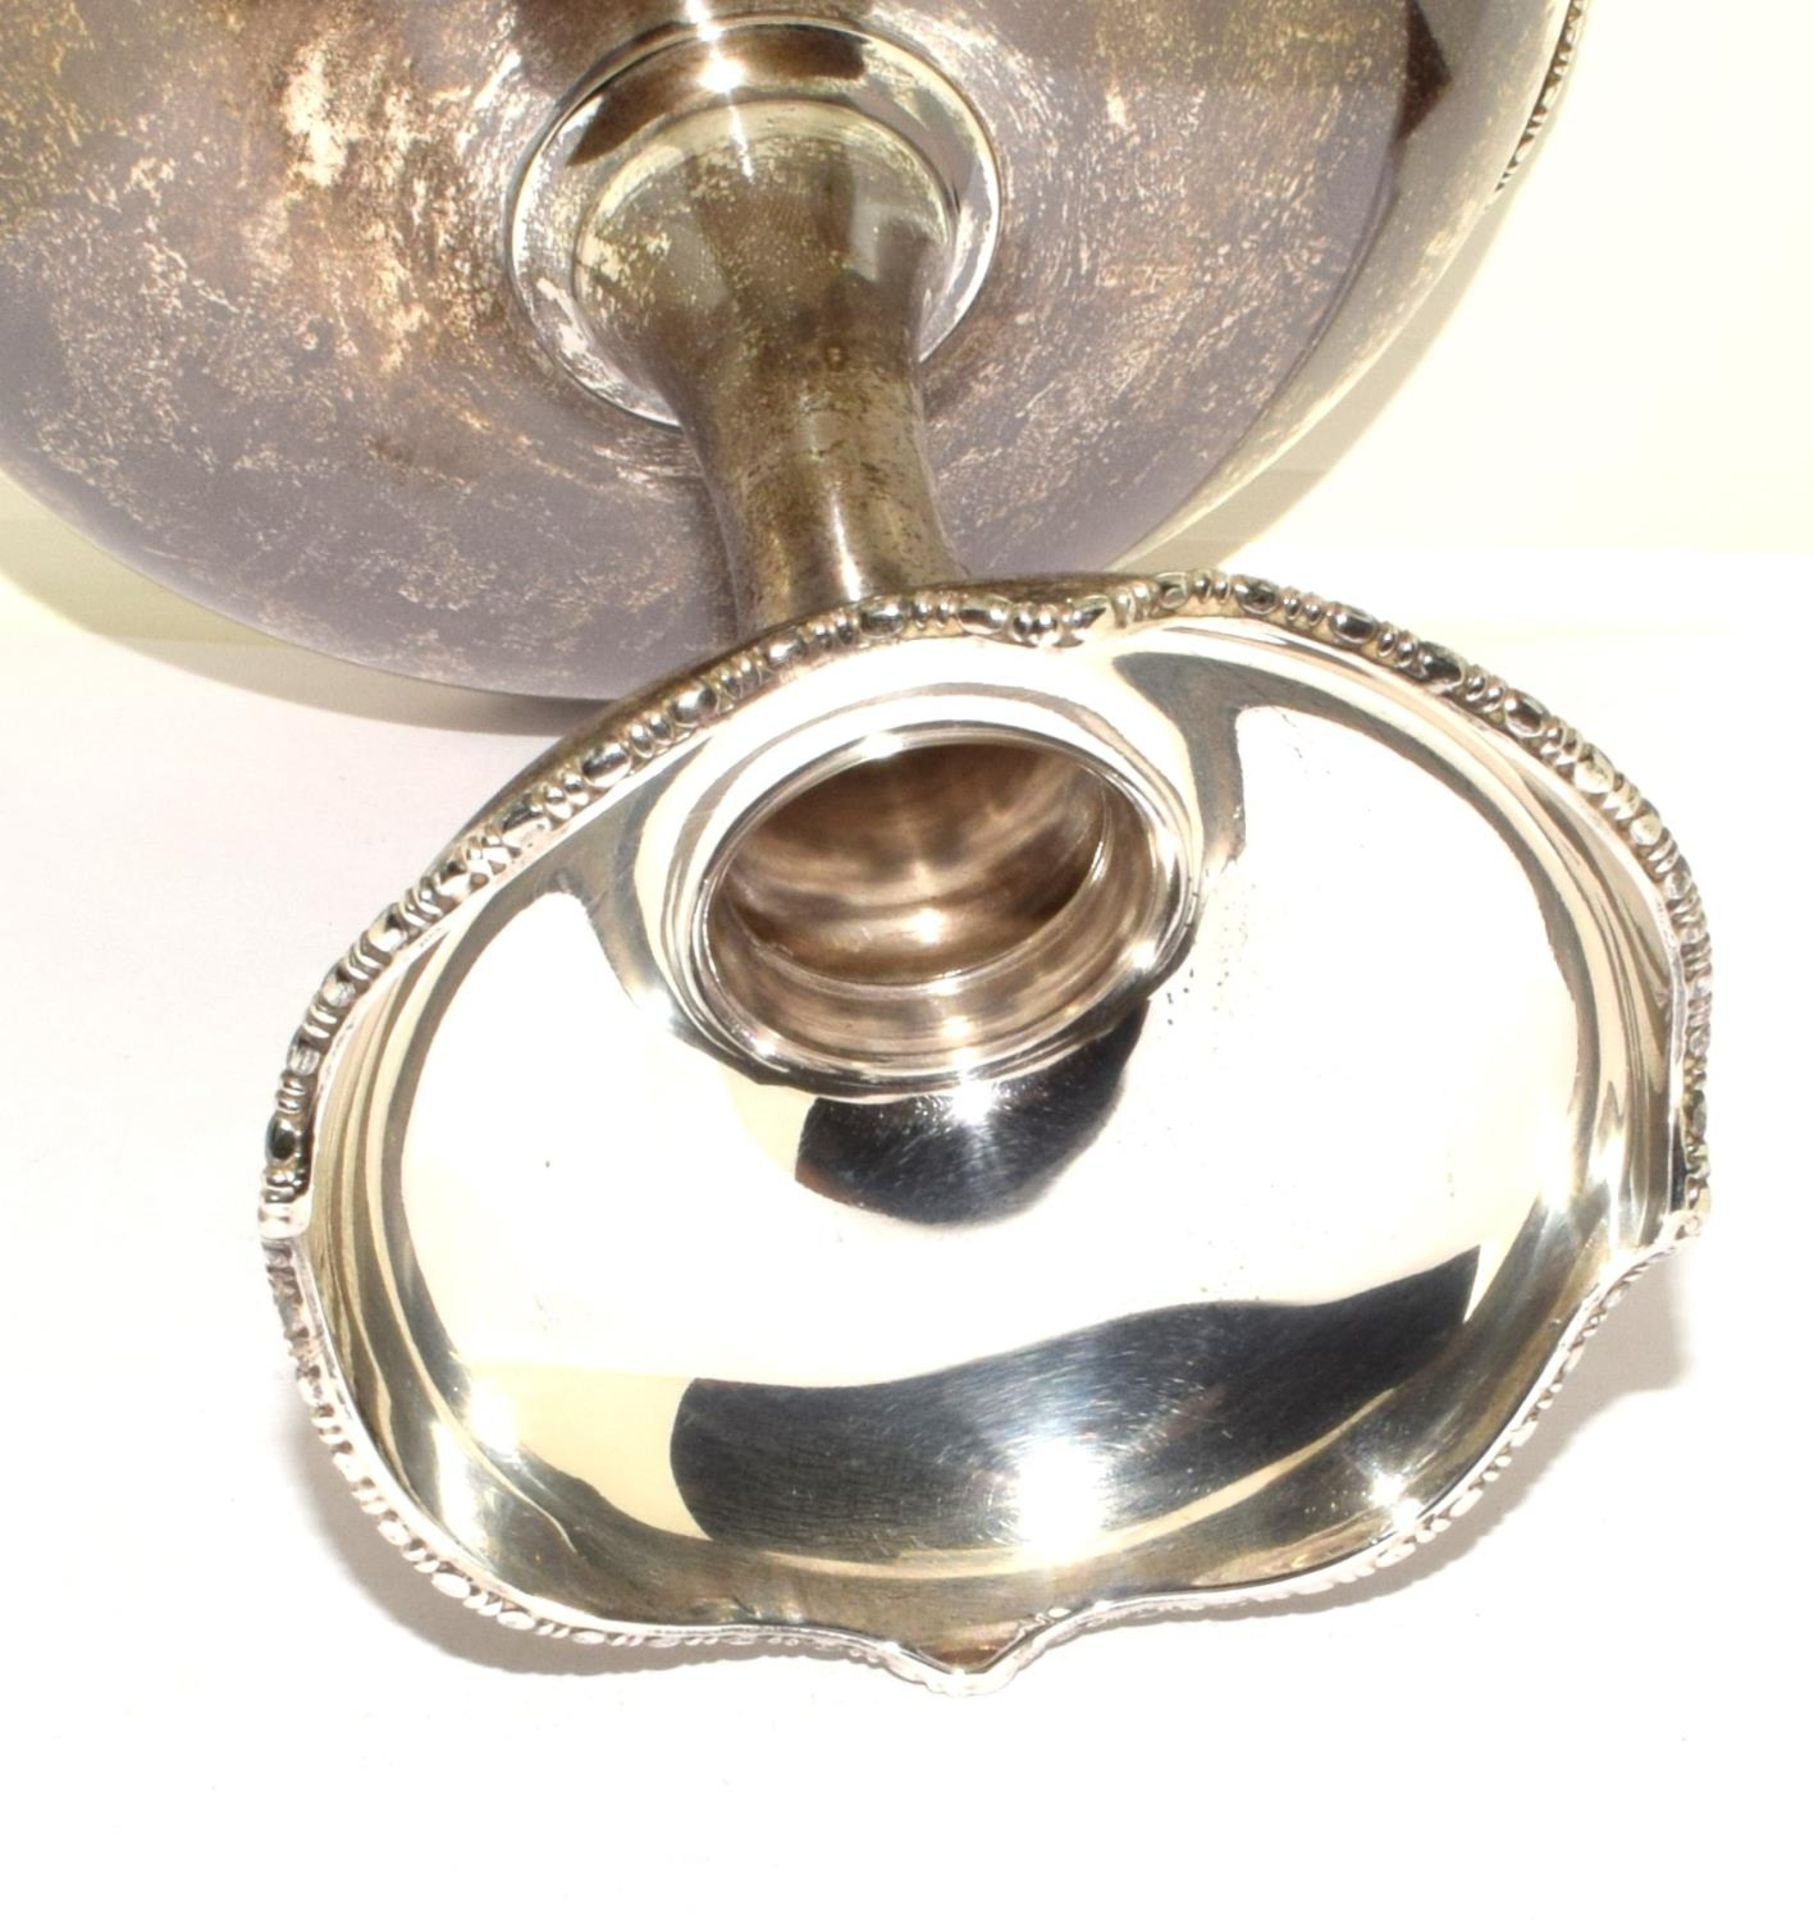 925 sterling silver pedestal center table bowl 220g - Image 5 of 6